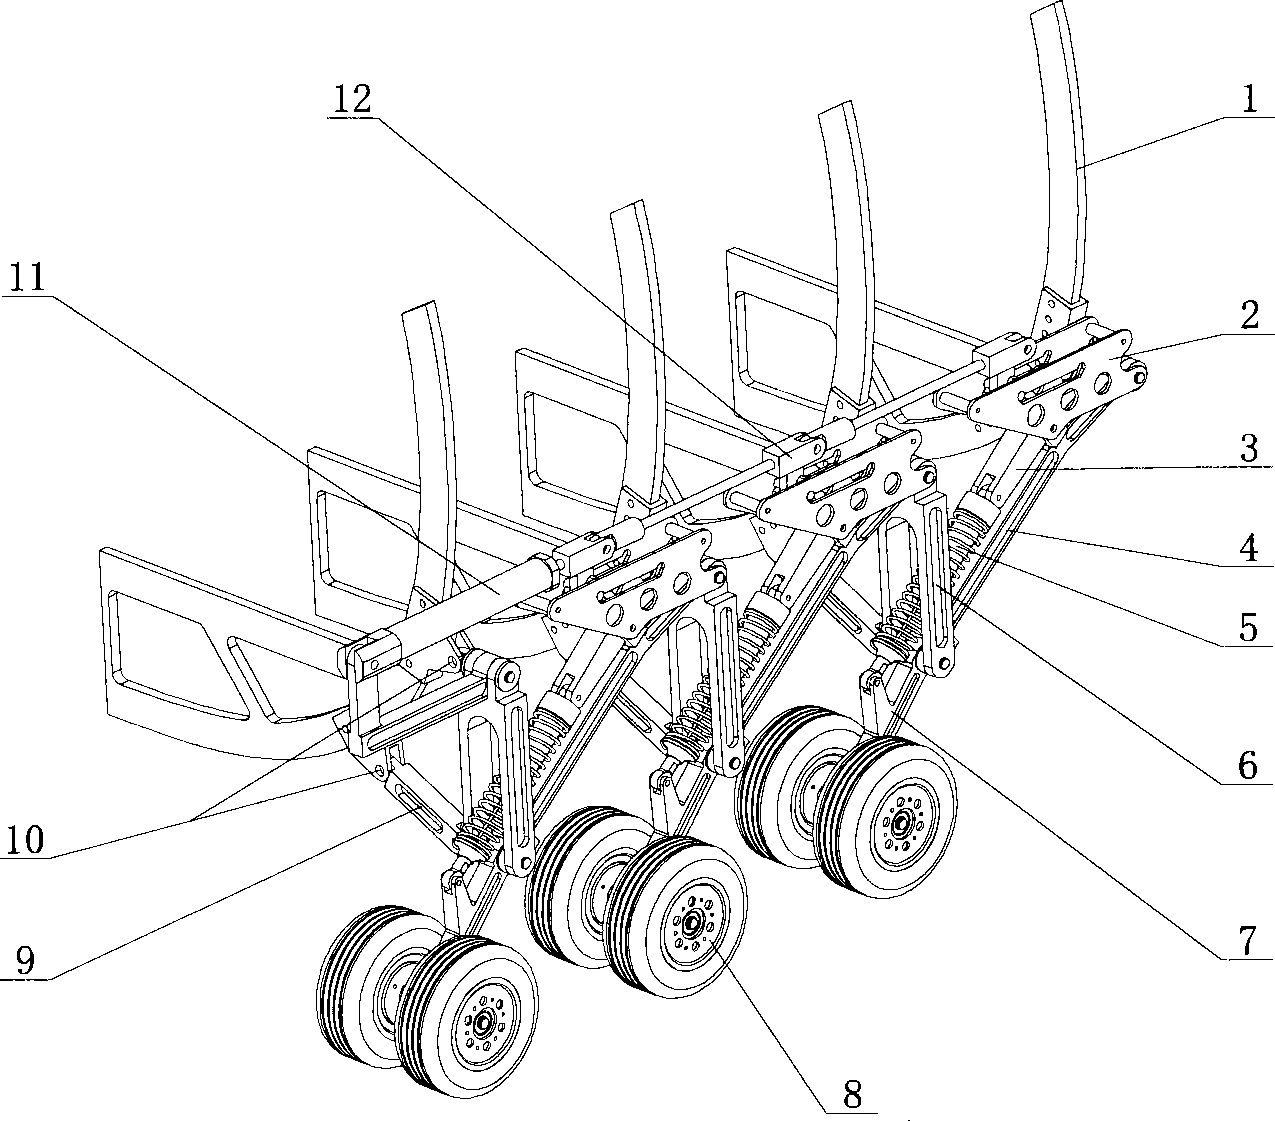 Small-sized foldable multi-wheel multi-column support type landing gear